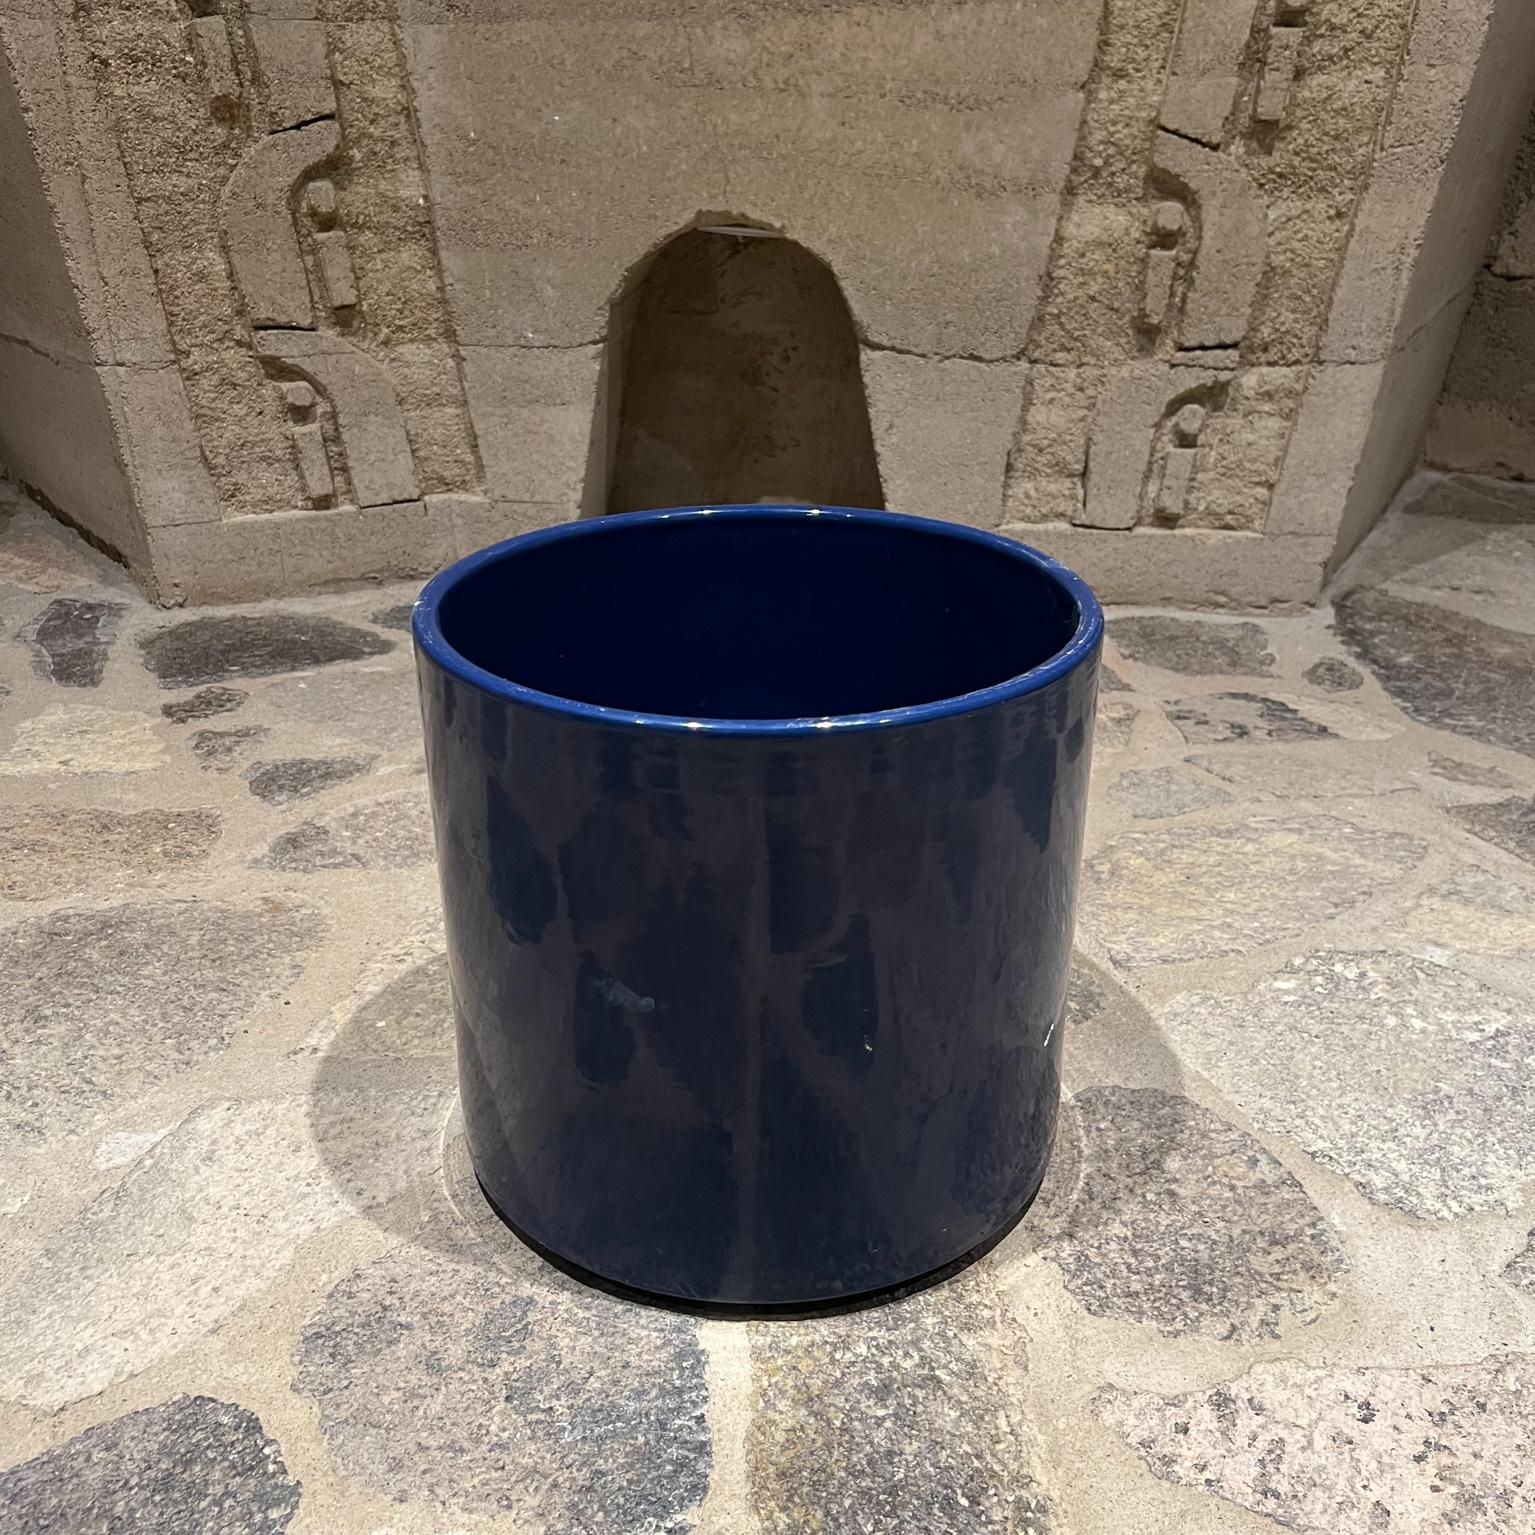 1960s Gainey ceramics pottery cobalt Blue AC 12 architectural planter pot La Verne California.
Measures: 12 x 13 diameter.
Planter Pot garden patio home.
Gainey Pottery. Signed underneath with maker's label.
Original preowned unrestored vintage